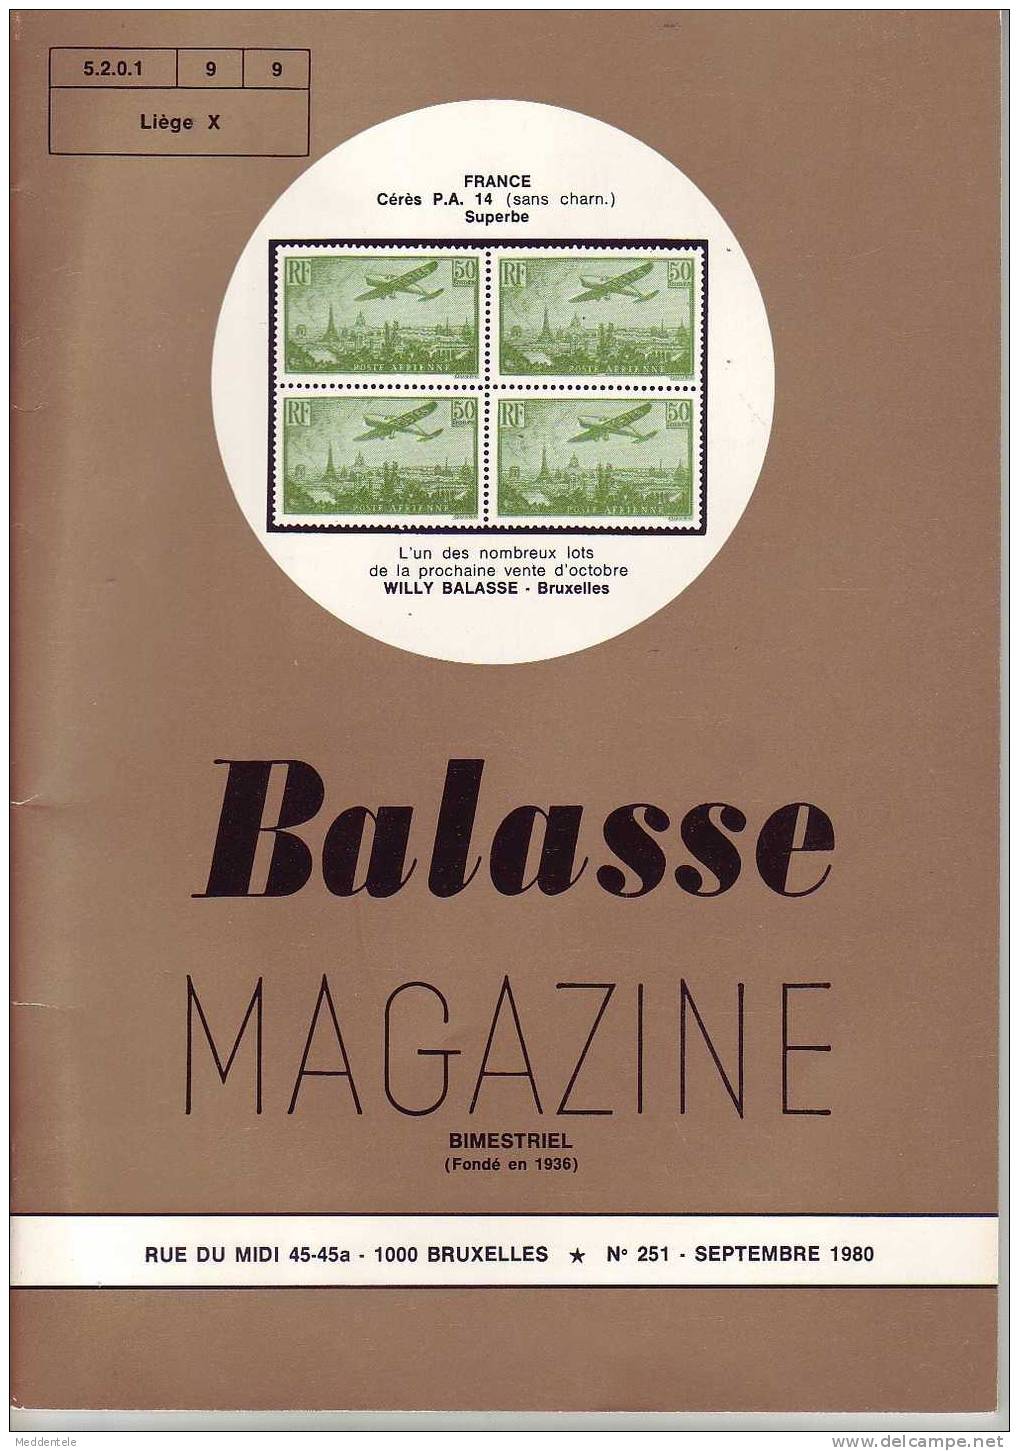 BALASSE MAGAZINE N° 251 - Francés (desde 1941)